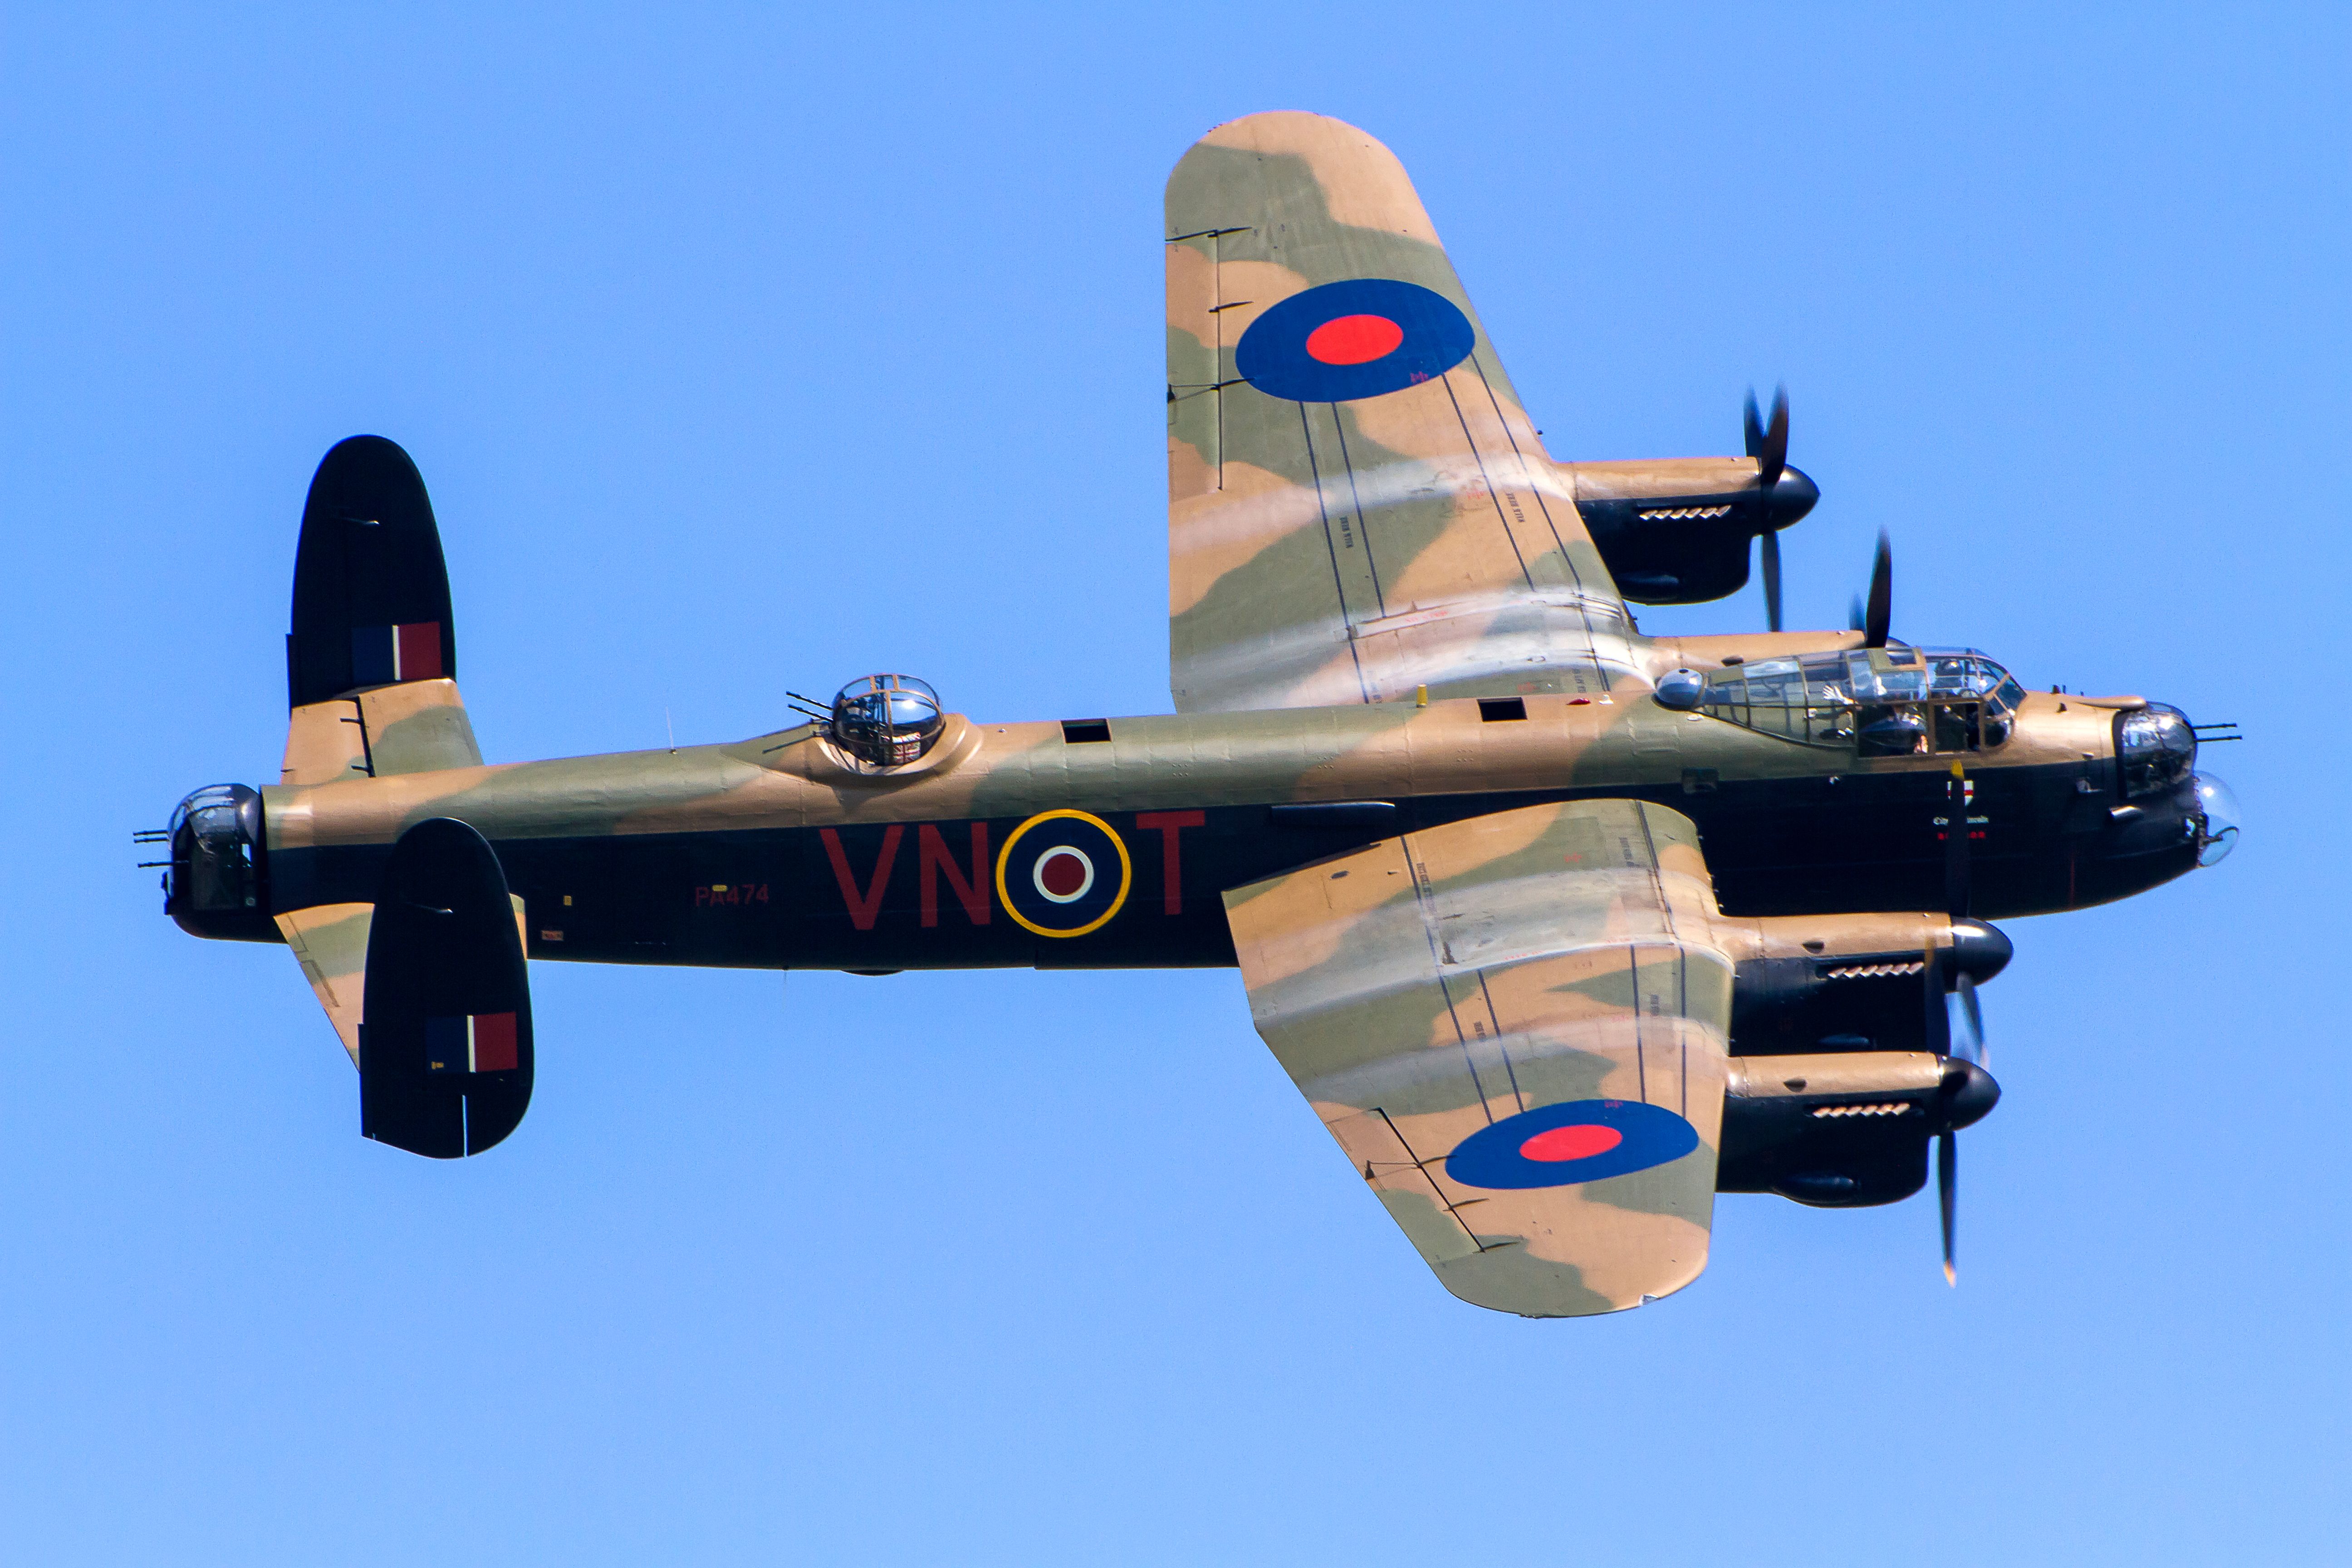 An Avro Lancaster in flight